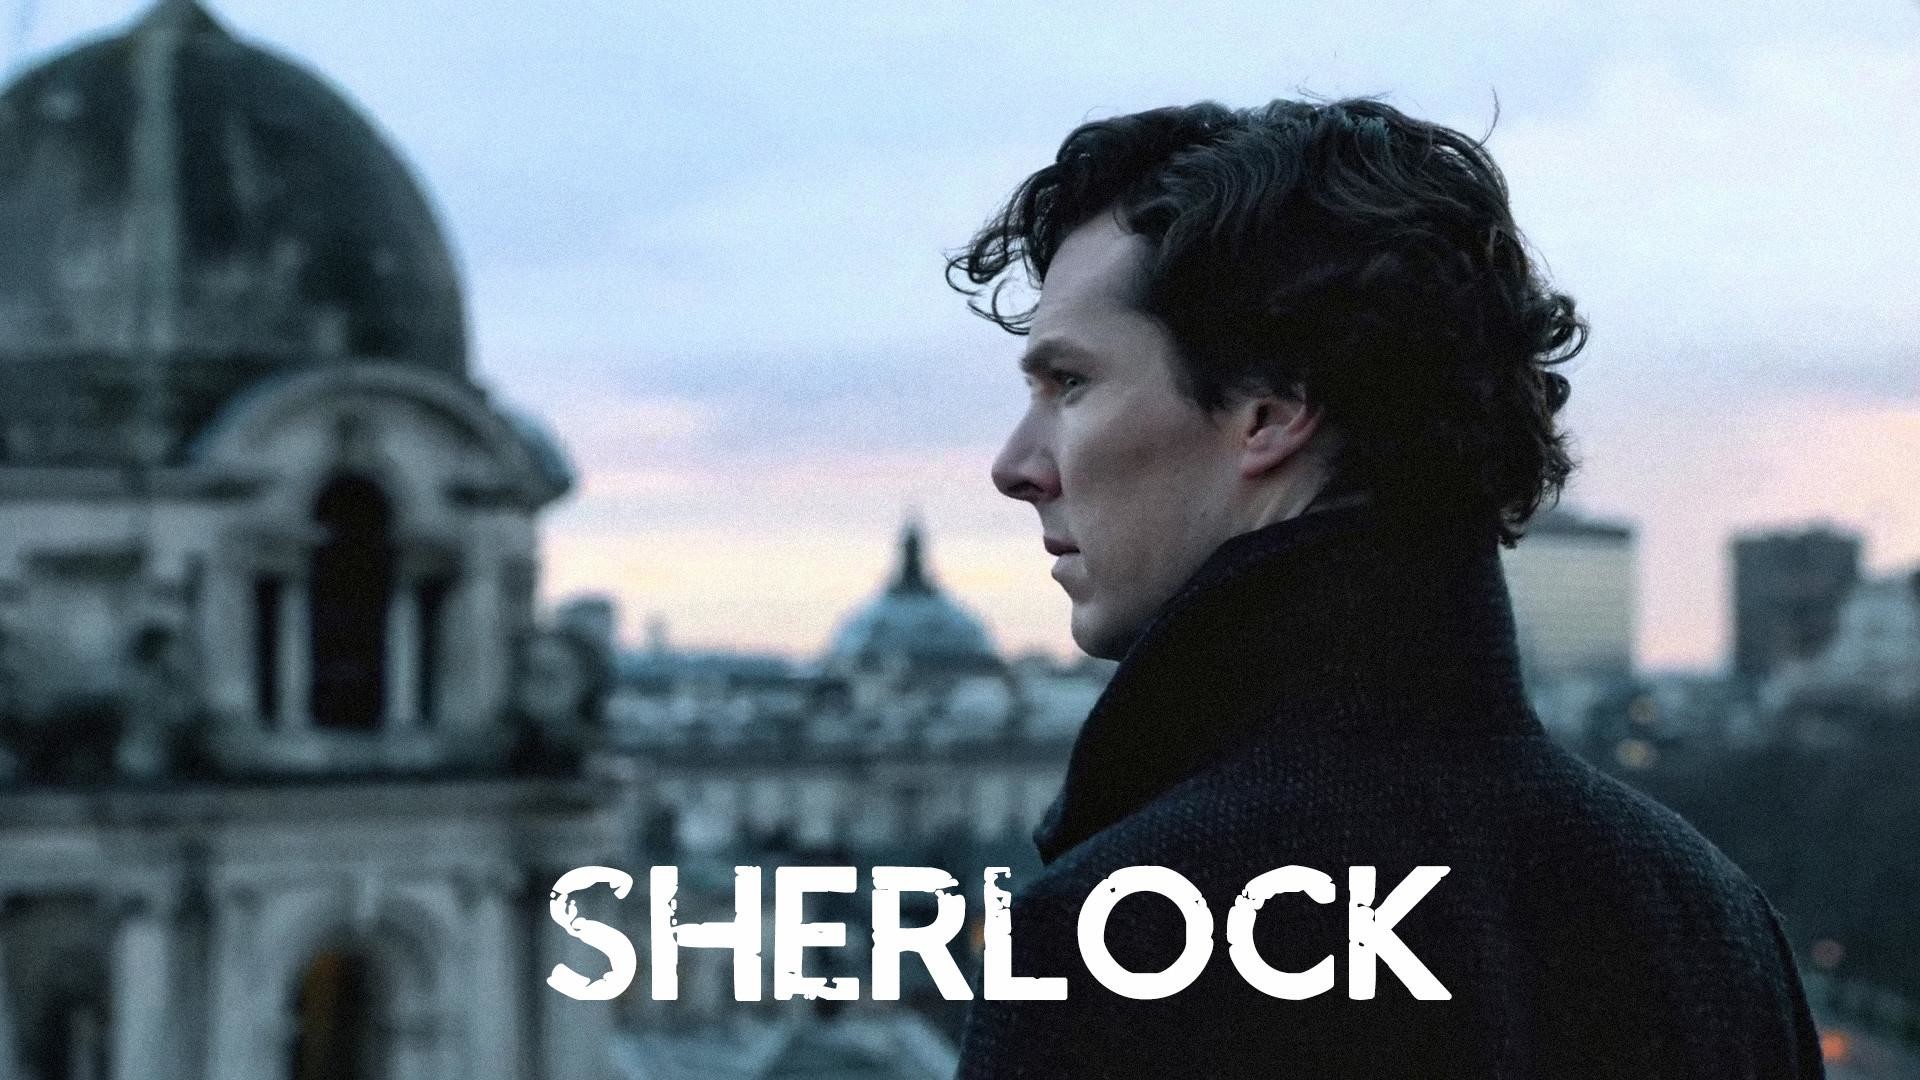 1920x1080  Sherlock Wallpaper Smiley Face (41+ images) Â· Download Â· sherlock bbc  wallpaper ...